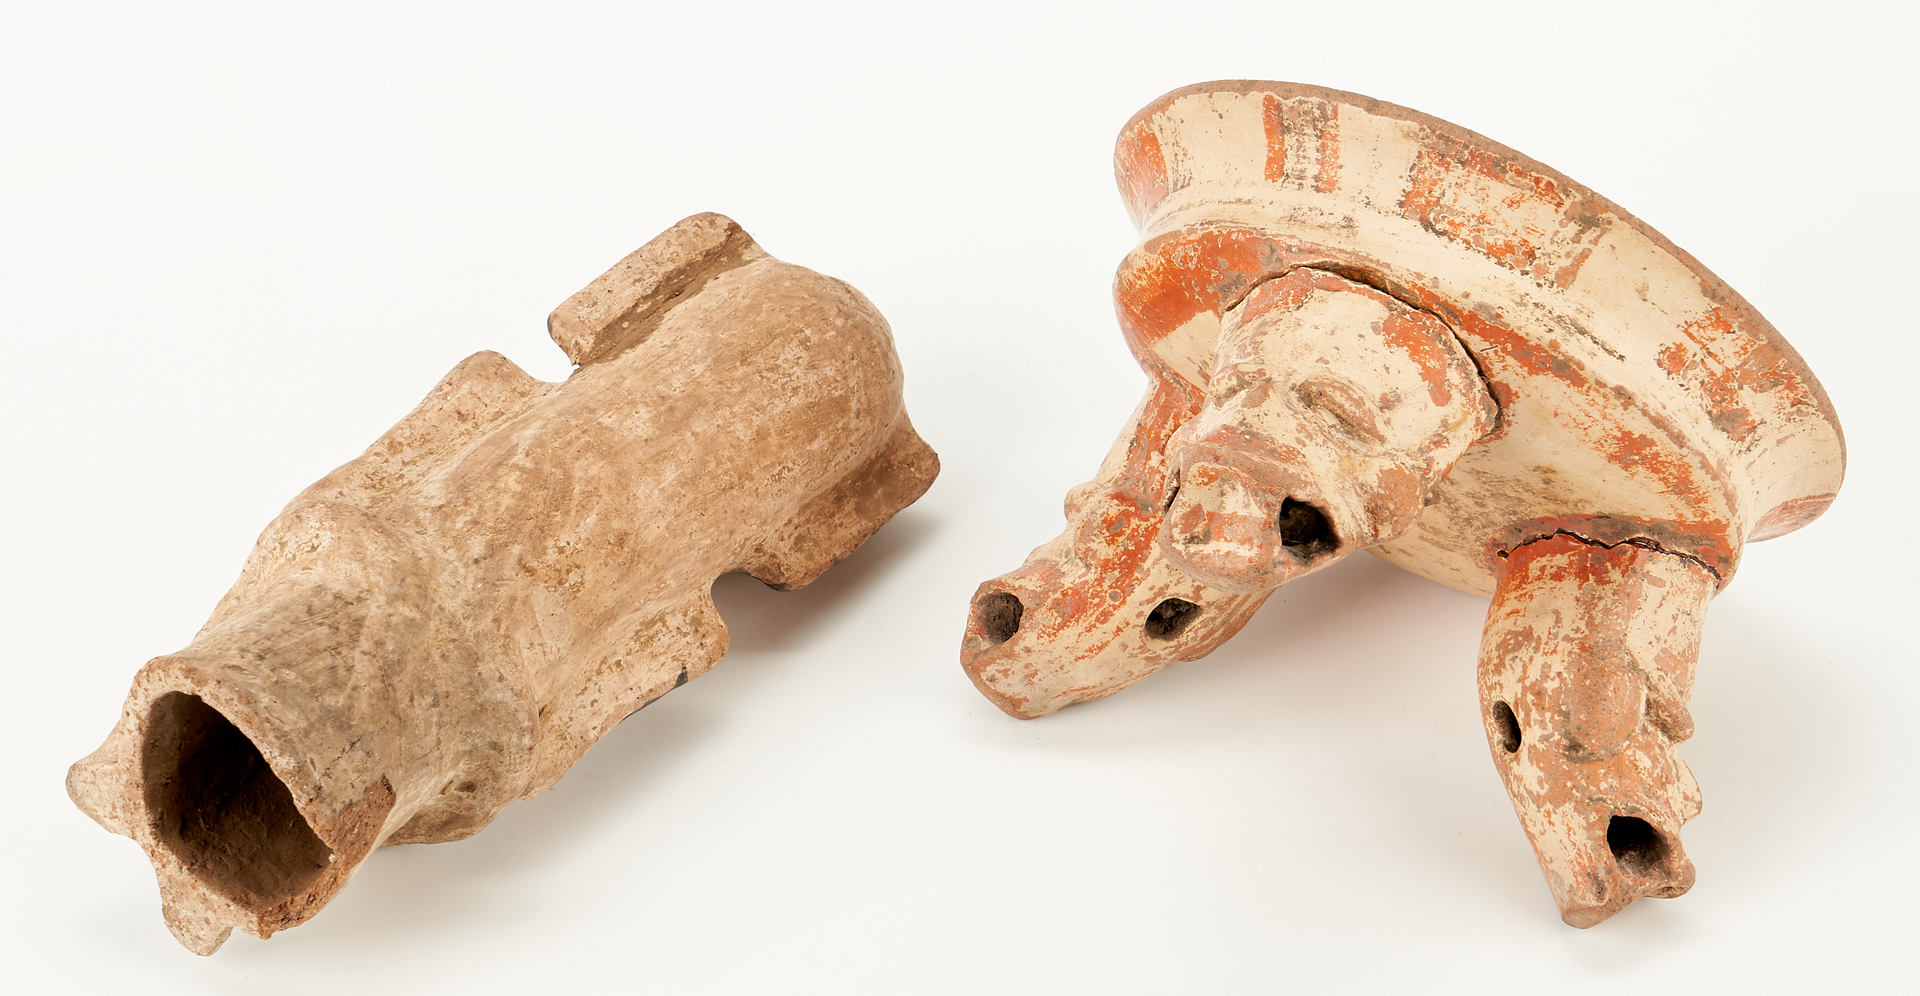 Lot 1124: 10 Pre-Columbian Nicoya, Costa Rica Pottery Items